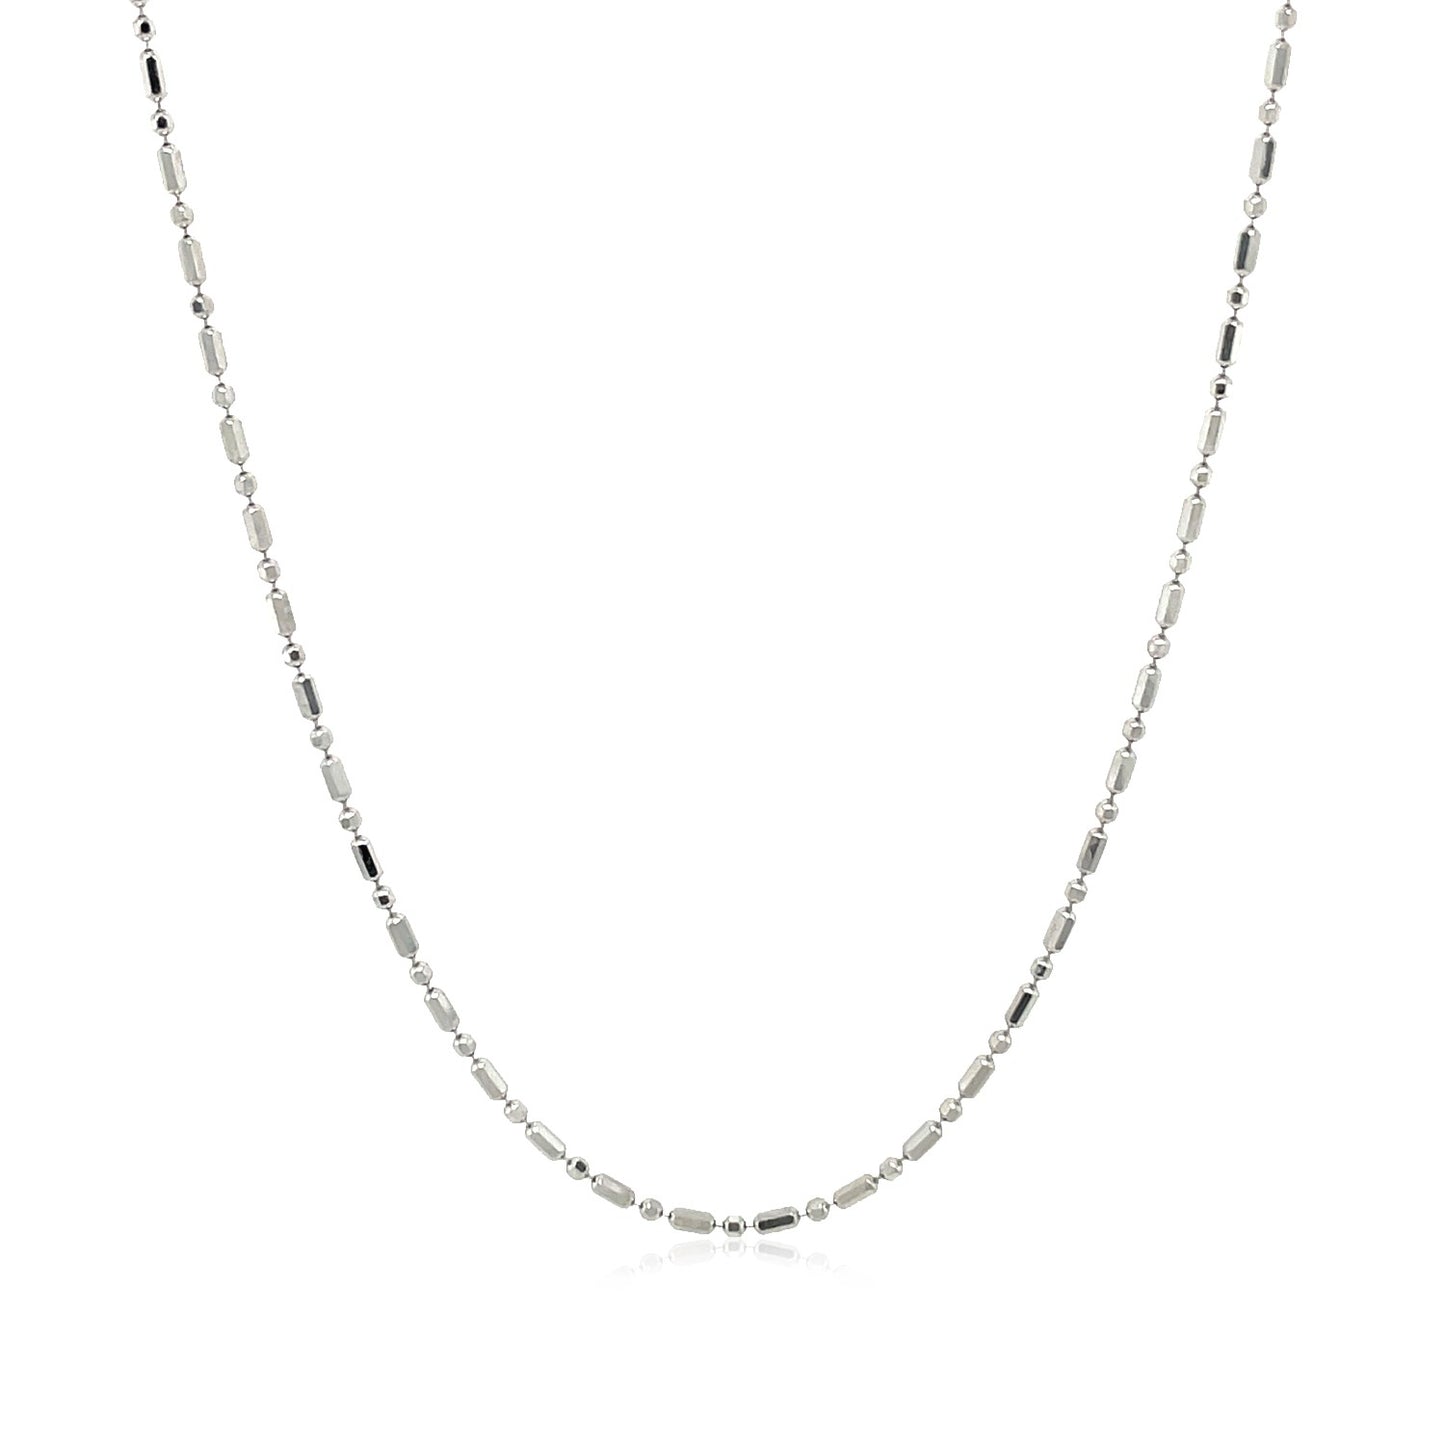 14k White Gold Diamond-Cut Alternating Bead Chain 1.2mm